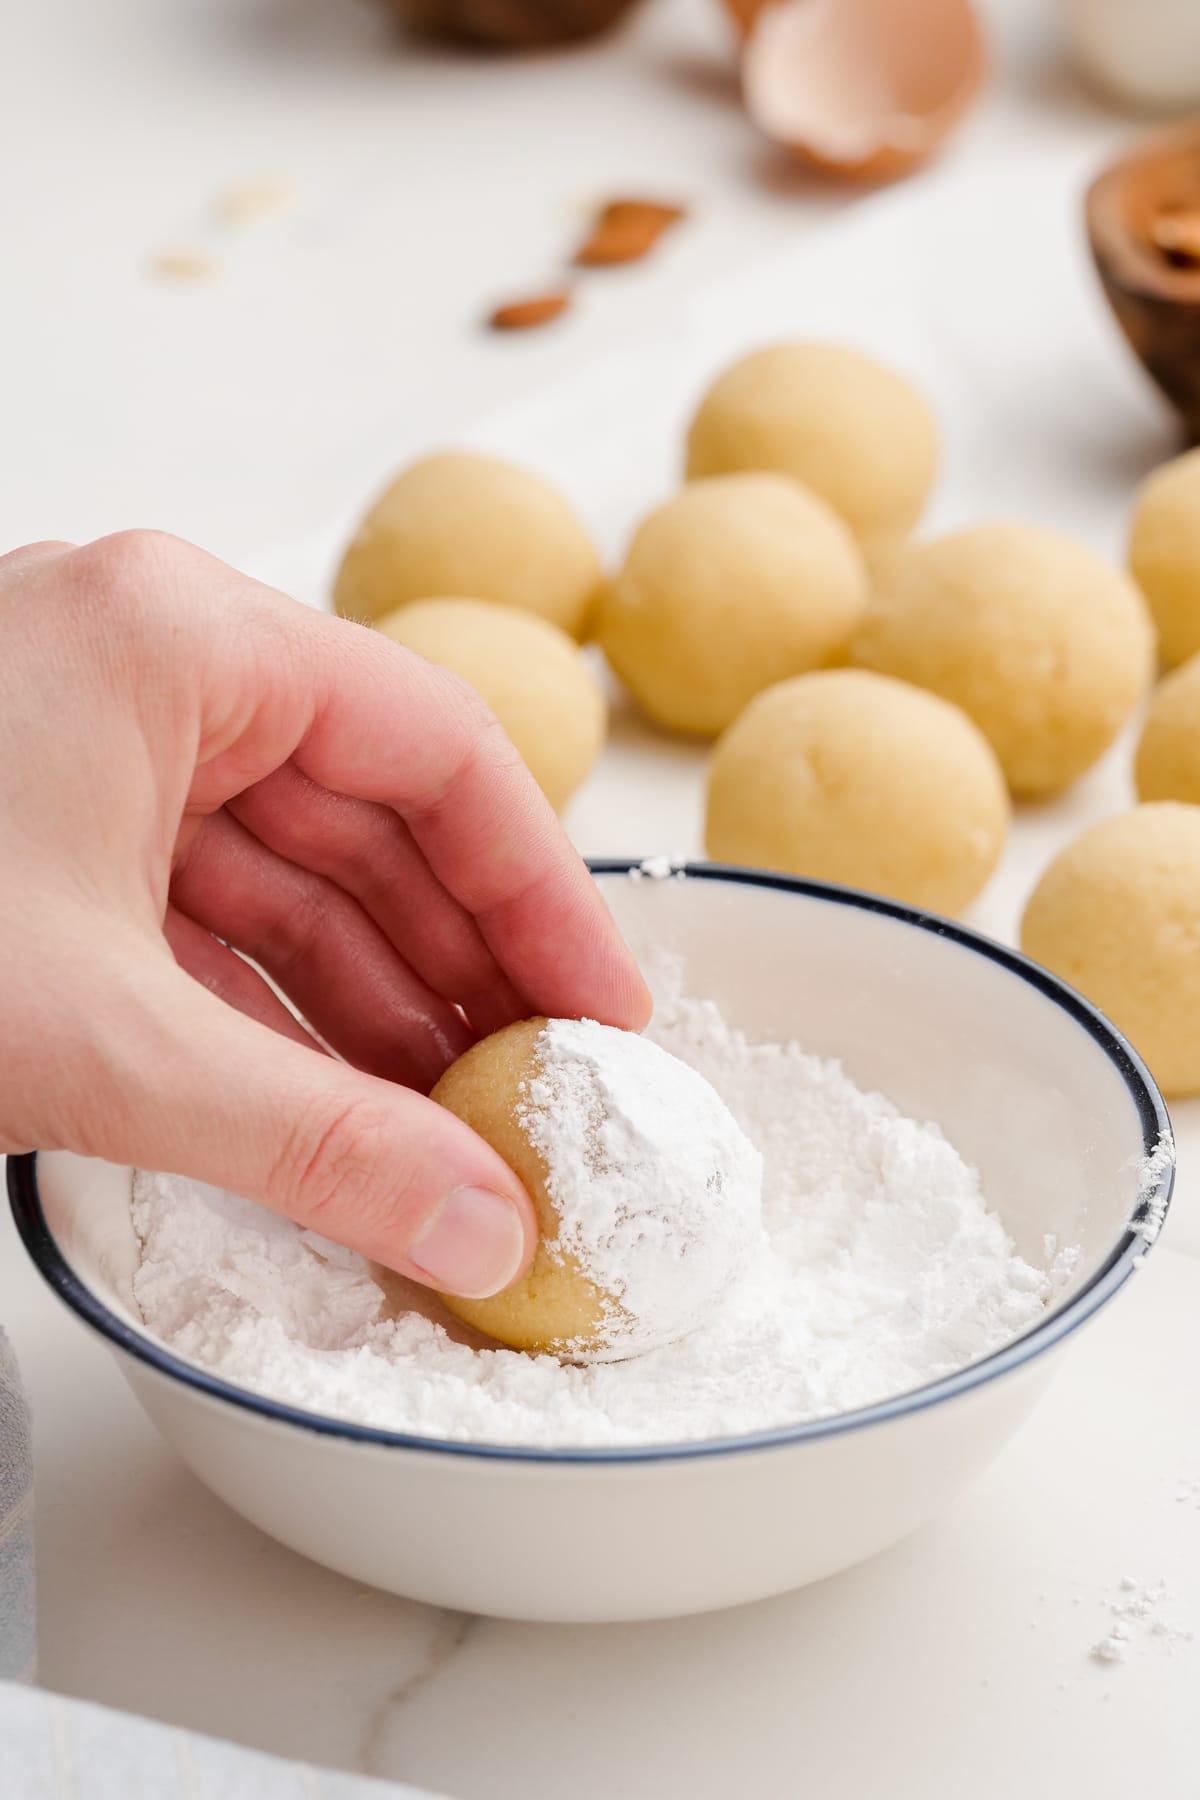 woman's hand dipping amaretti cookies dough ball into powdered sugar